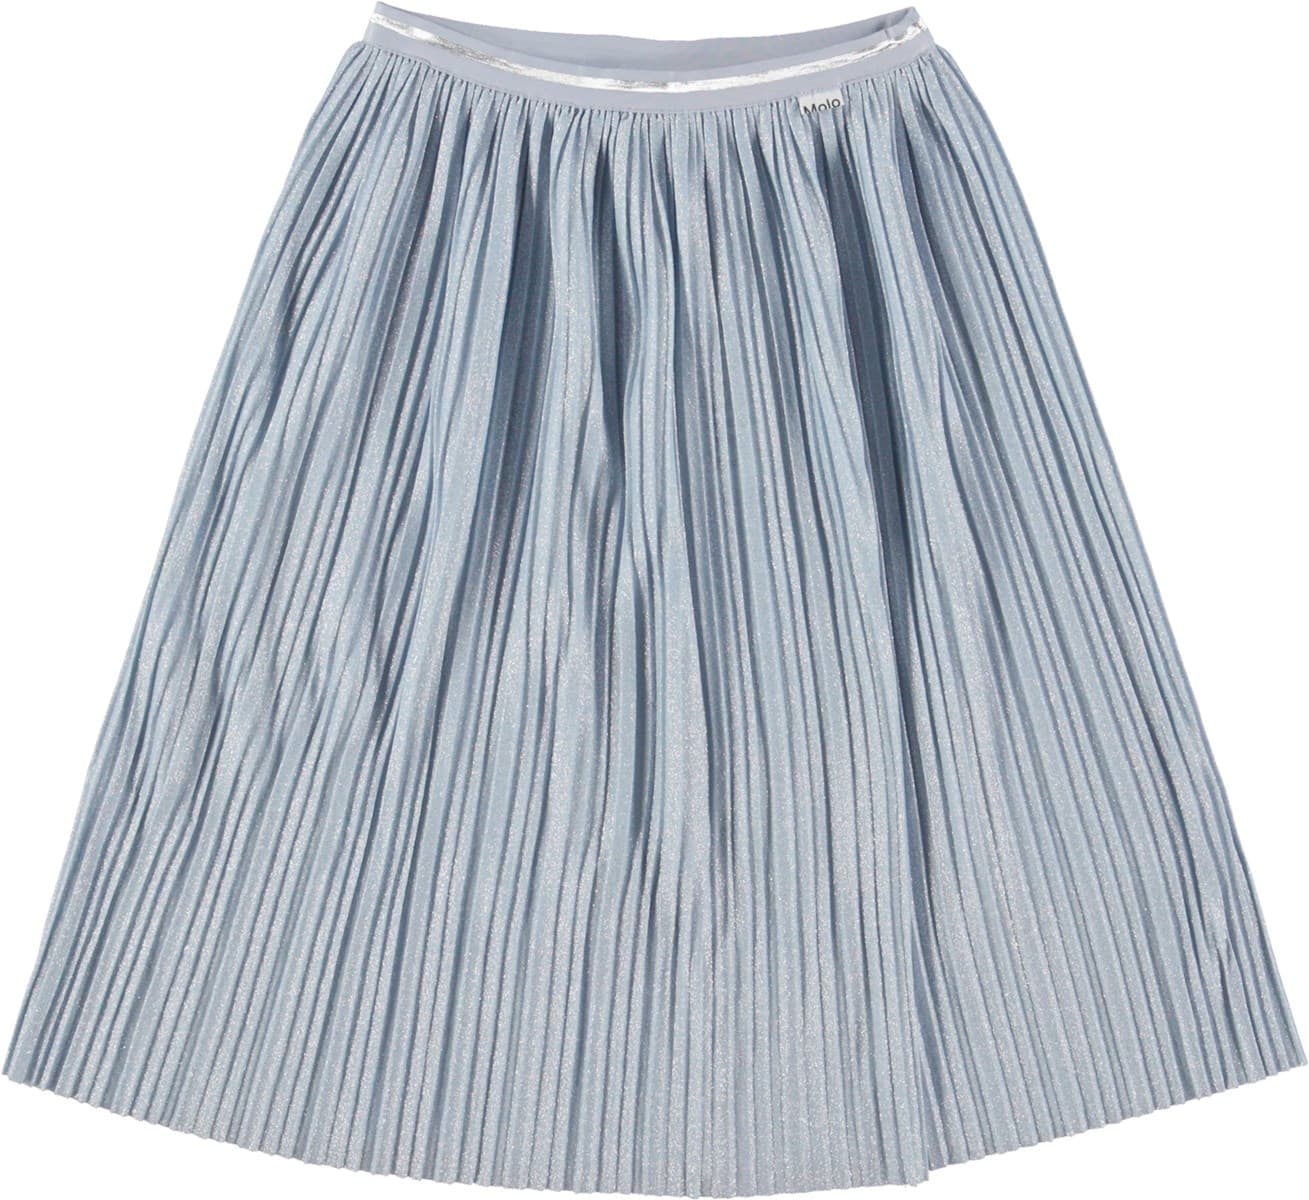 Bailini Skirt